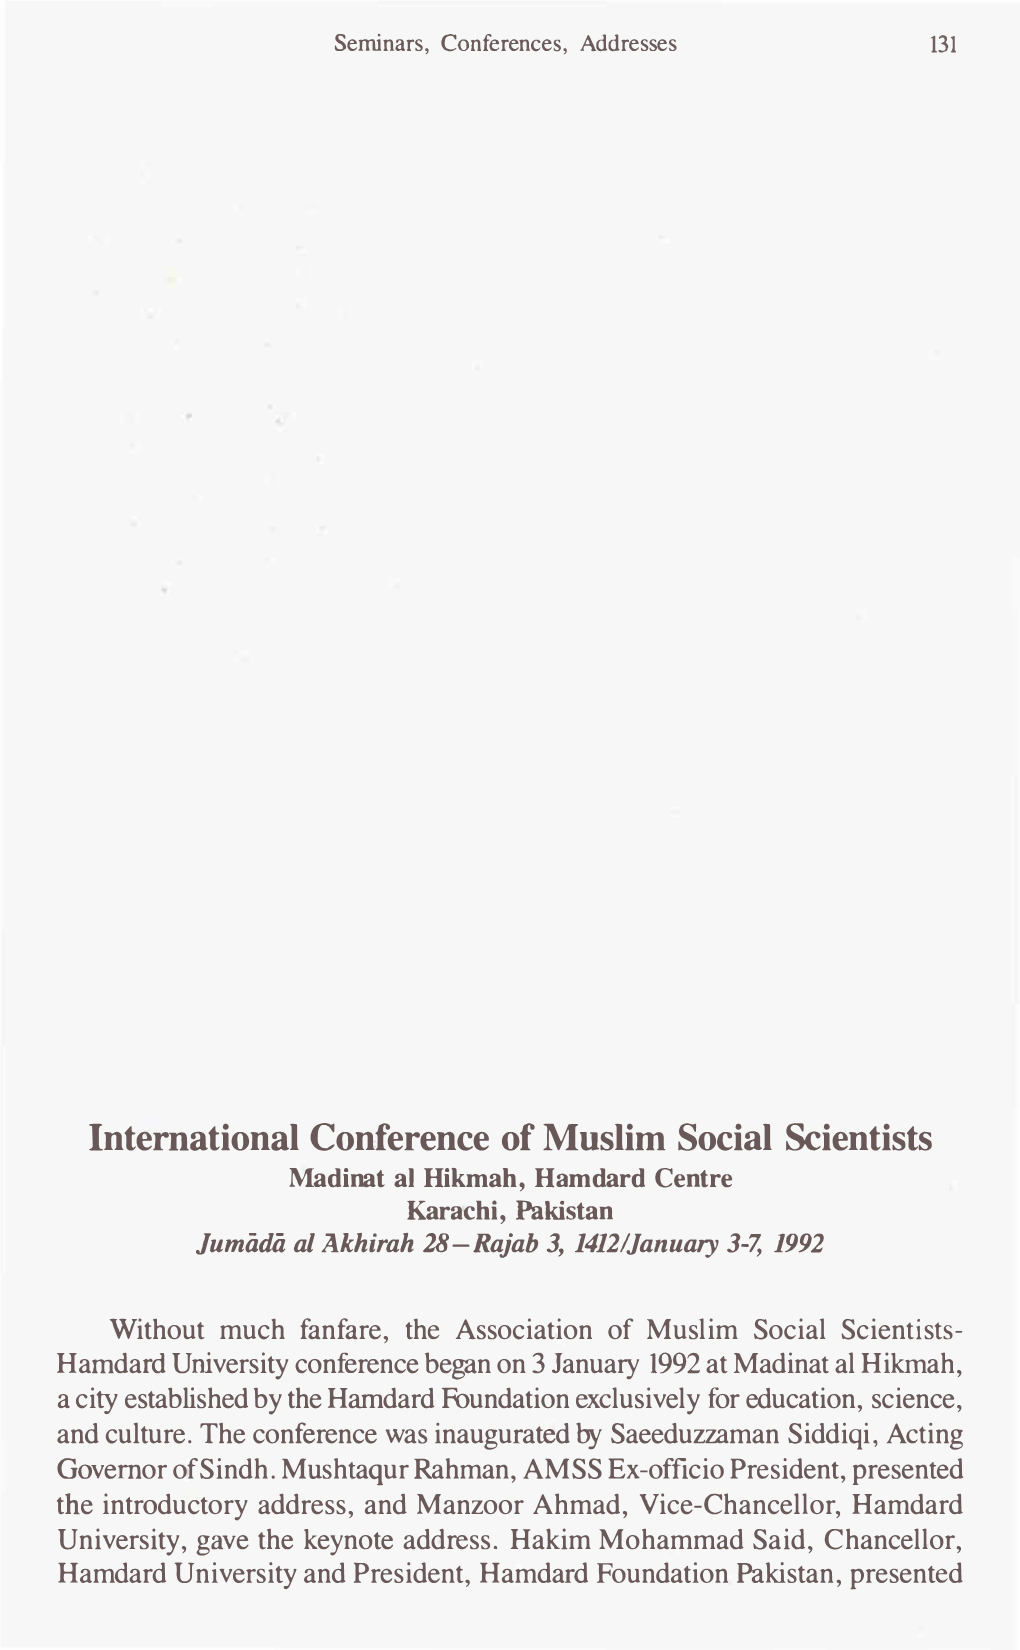 International Conference of Muslim Social Scientists Madinat Al Hikmah, Hamdard Centre Karachi, Pakistan Jumiida Al.A.Khirah 28-Rajab 3, 1412/January 3-7, 1992